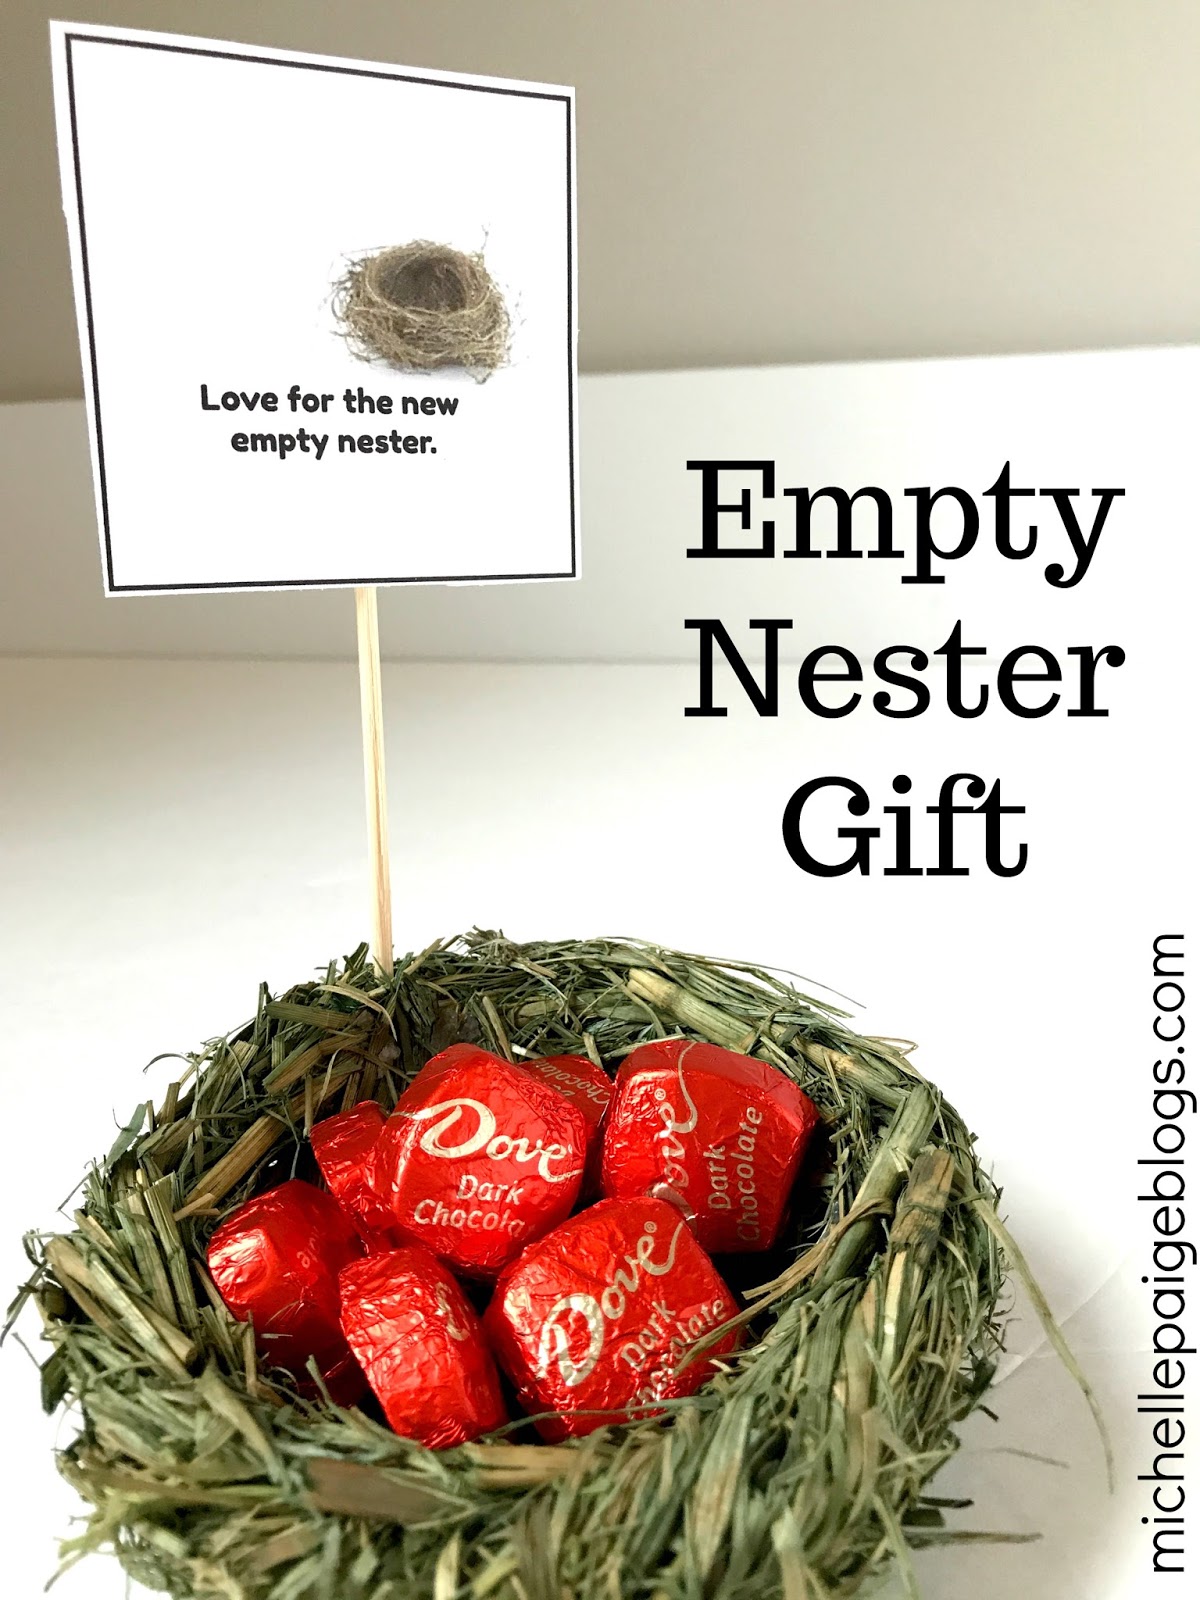 michelle paige blogs: Empty Nester Gift